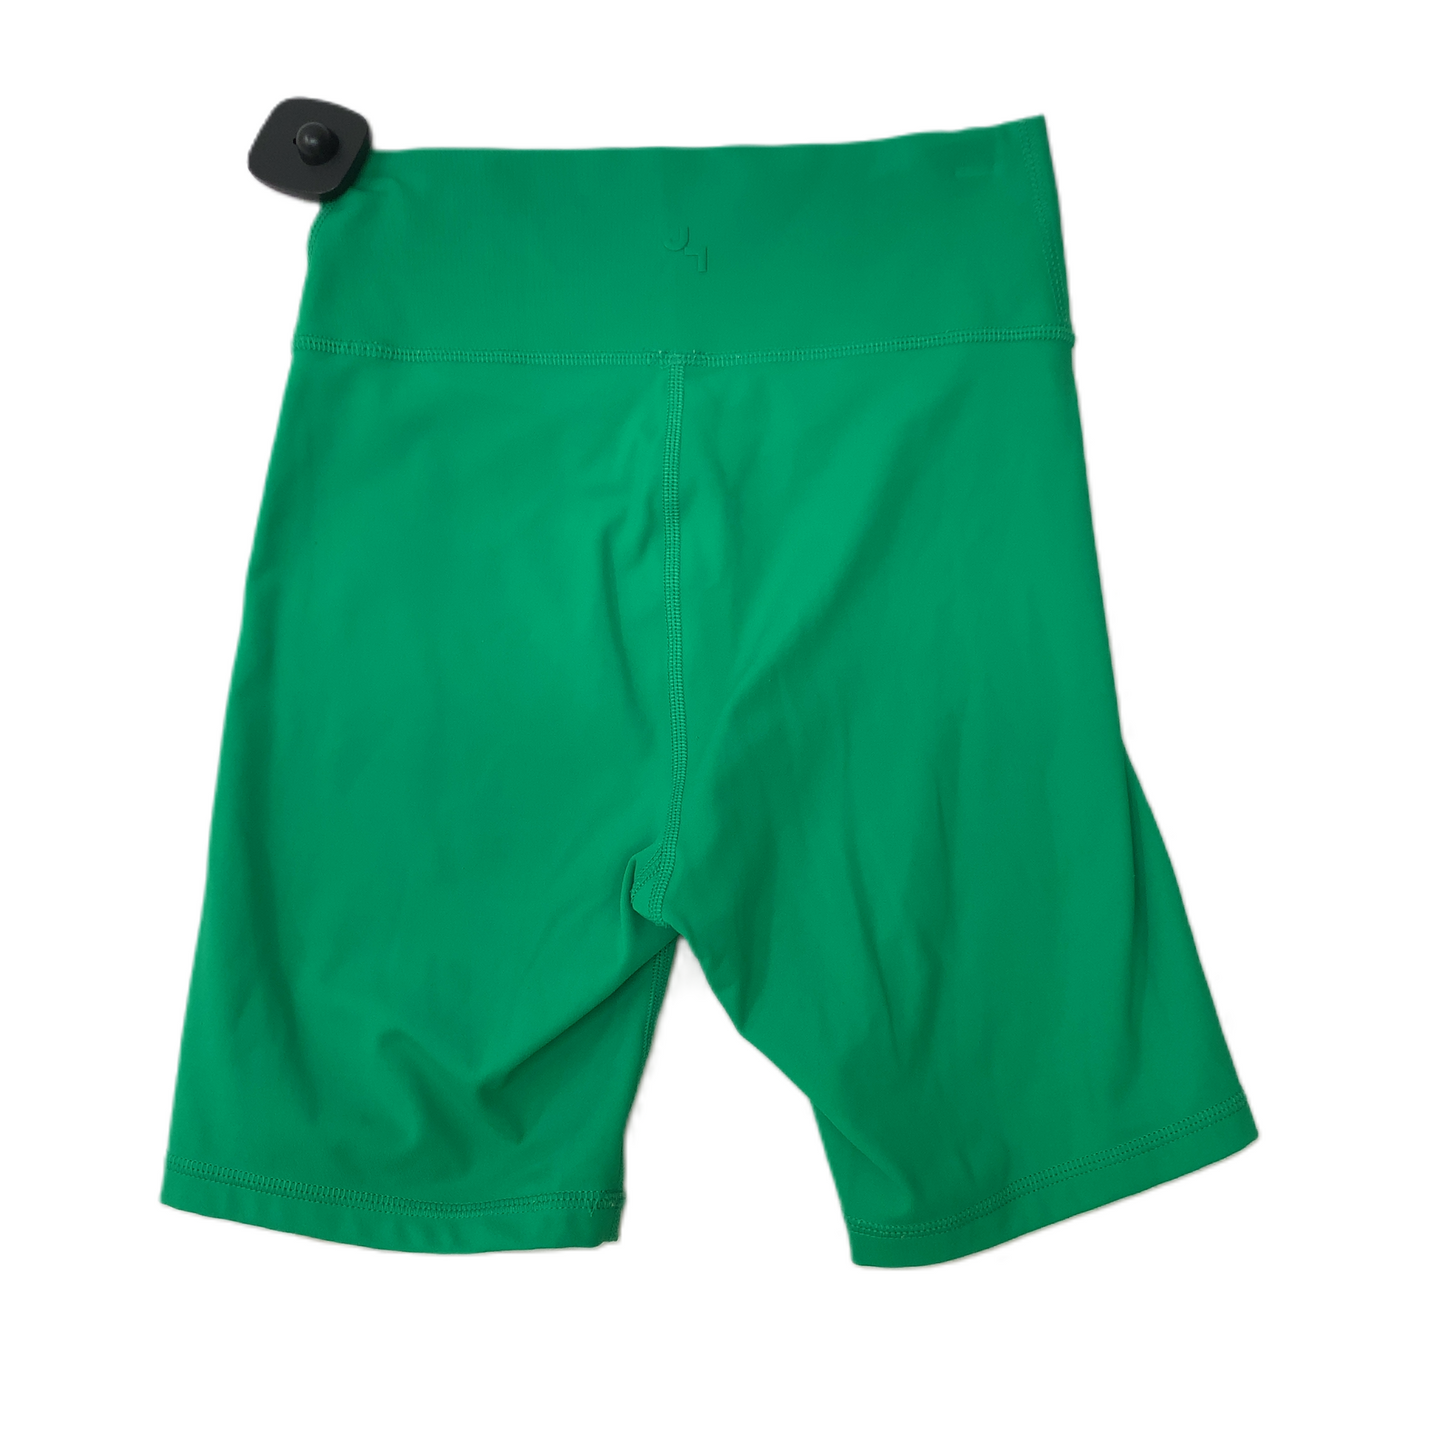 Athletic Shorts By Joy Lab  Size: Xs